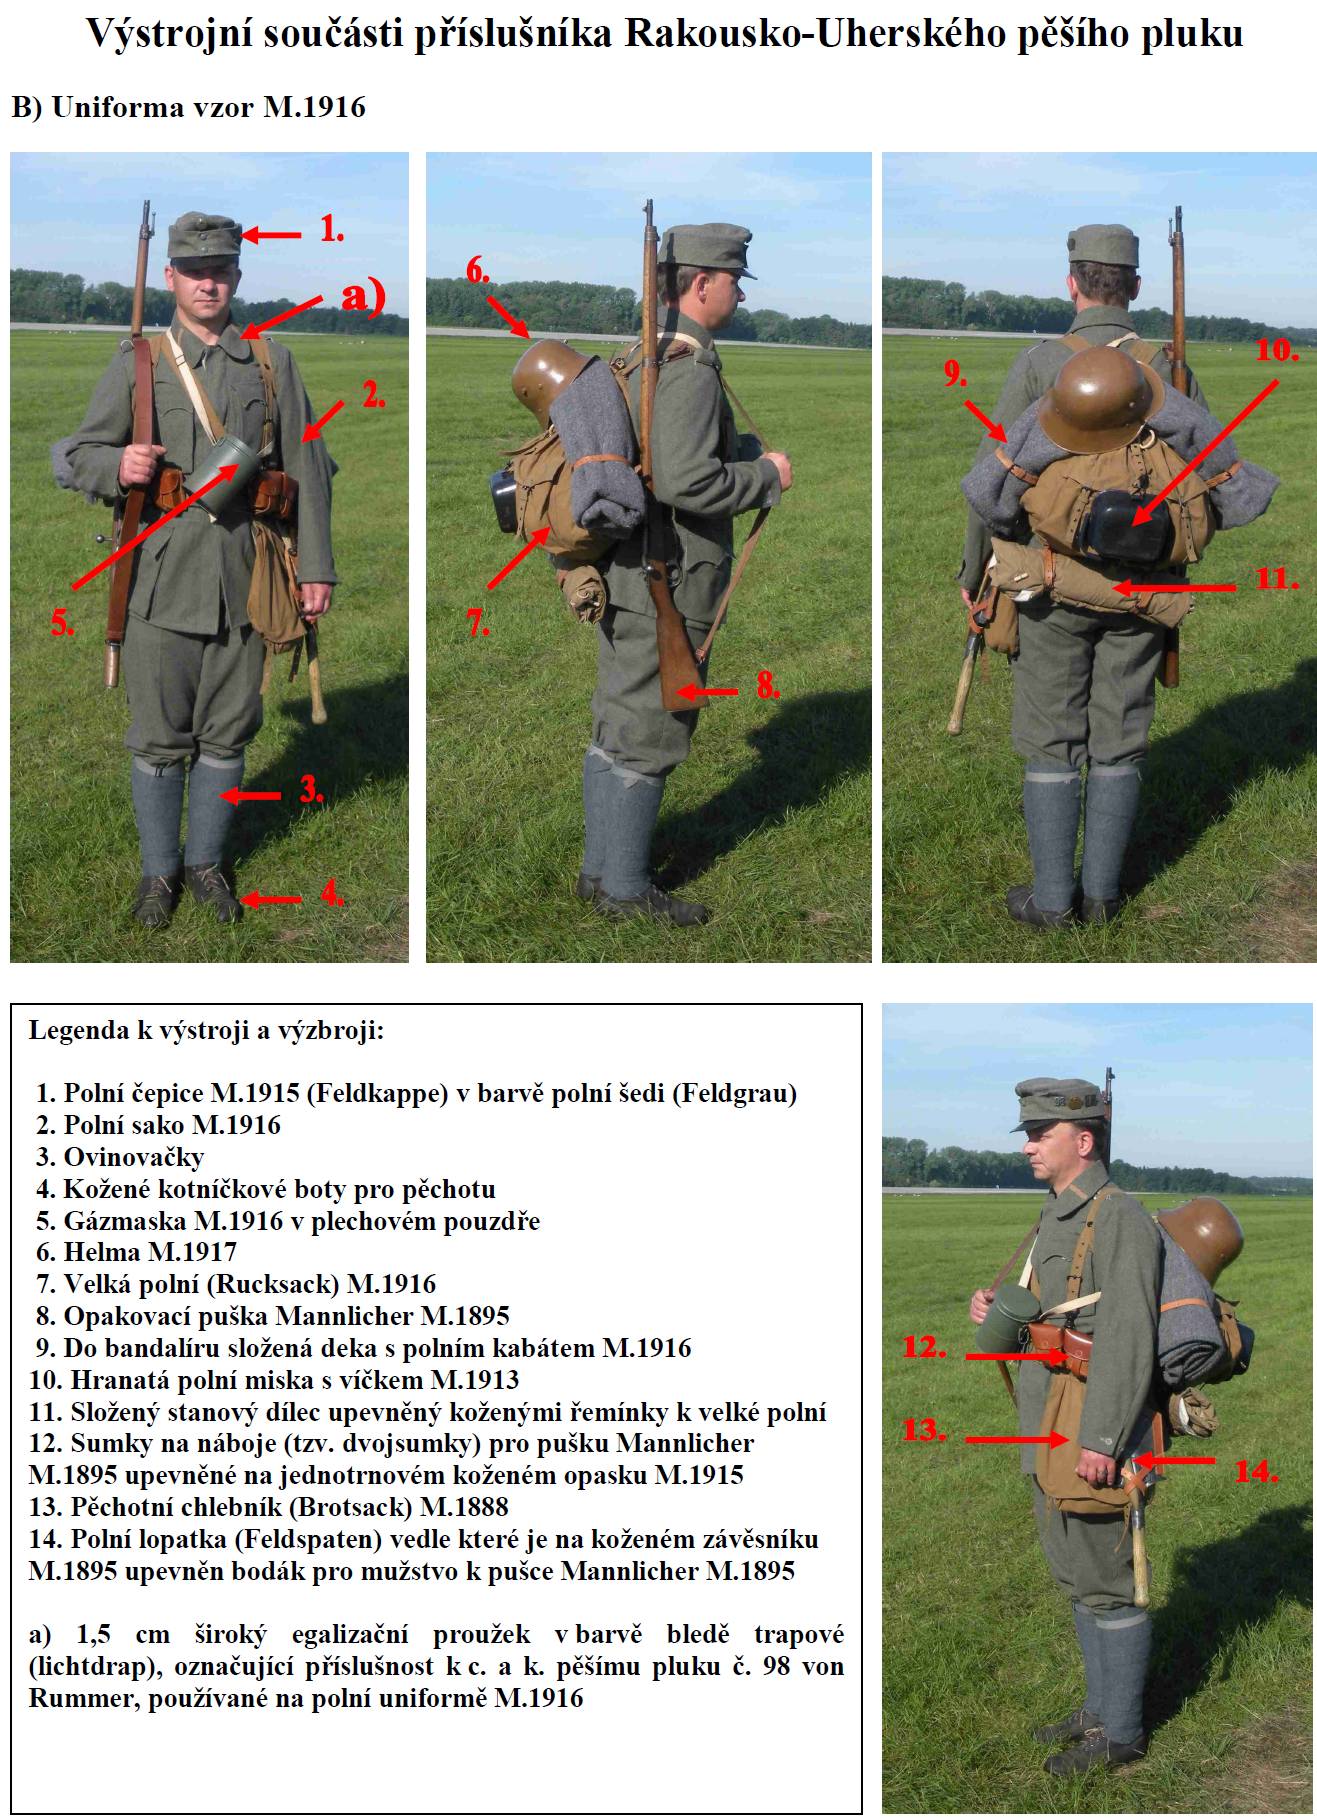 Uniformy c. a k. pechoty M.1916